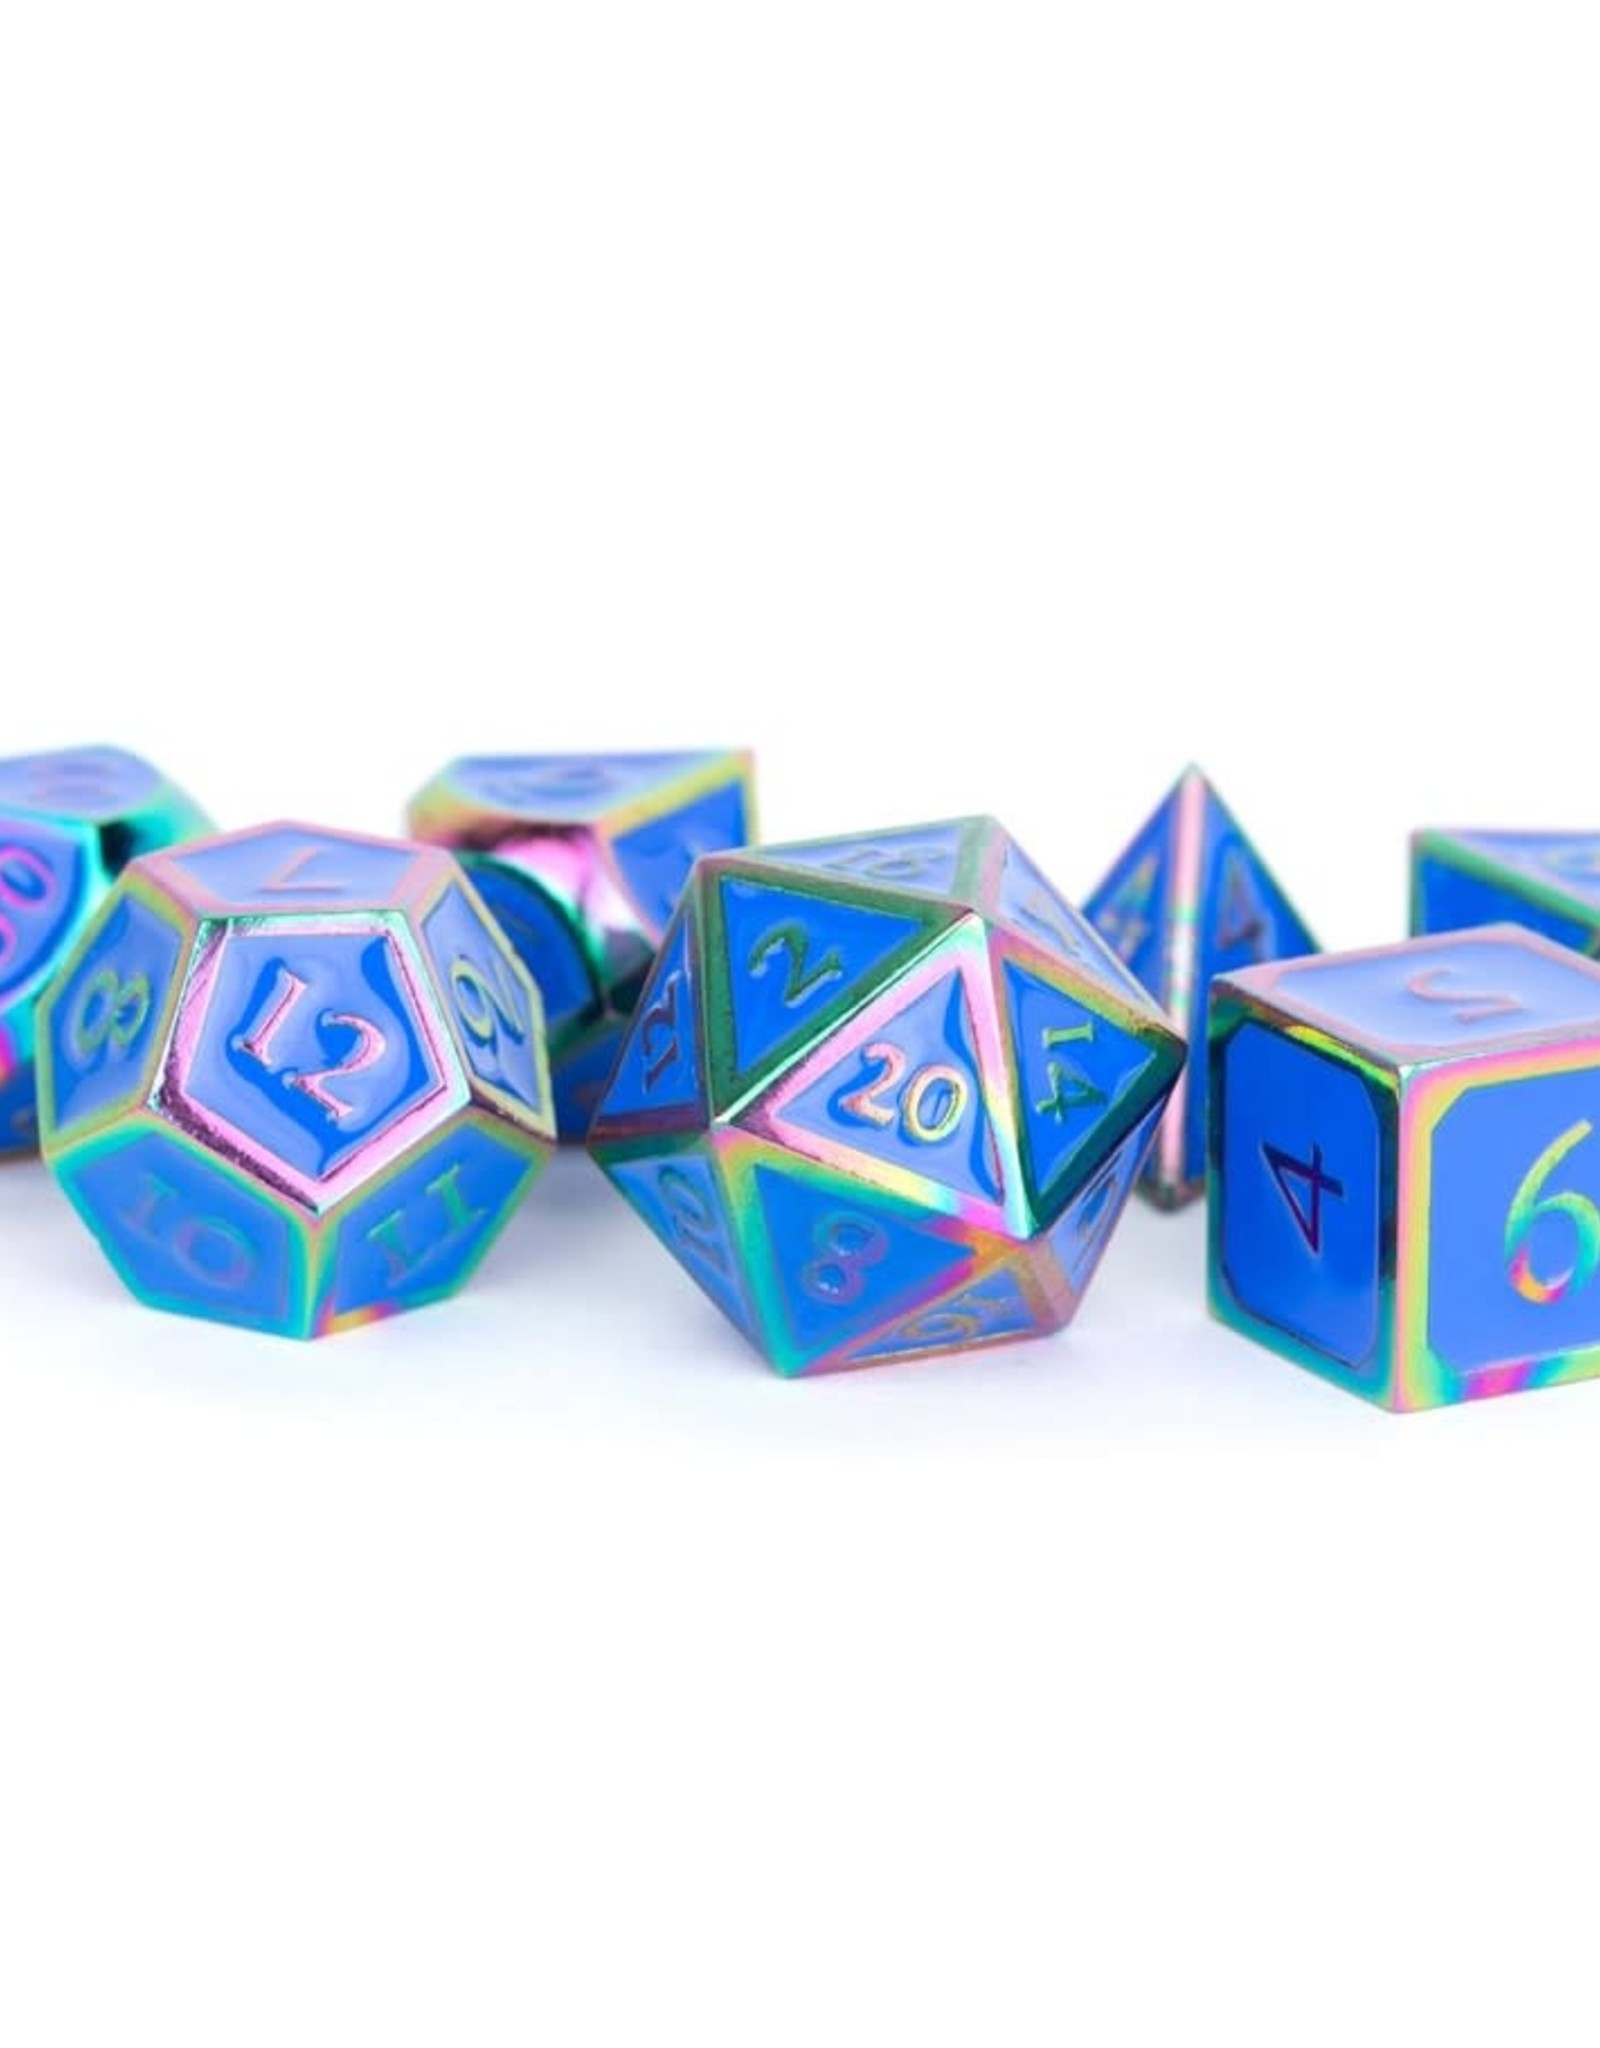 Metallic Dice Games Metal Polyhedral Dice (7) Rainbow with Blue Enamel